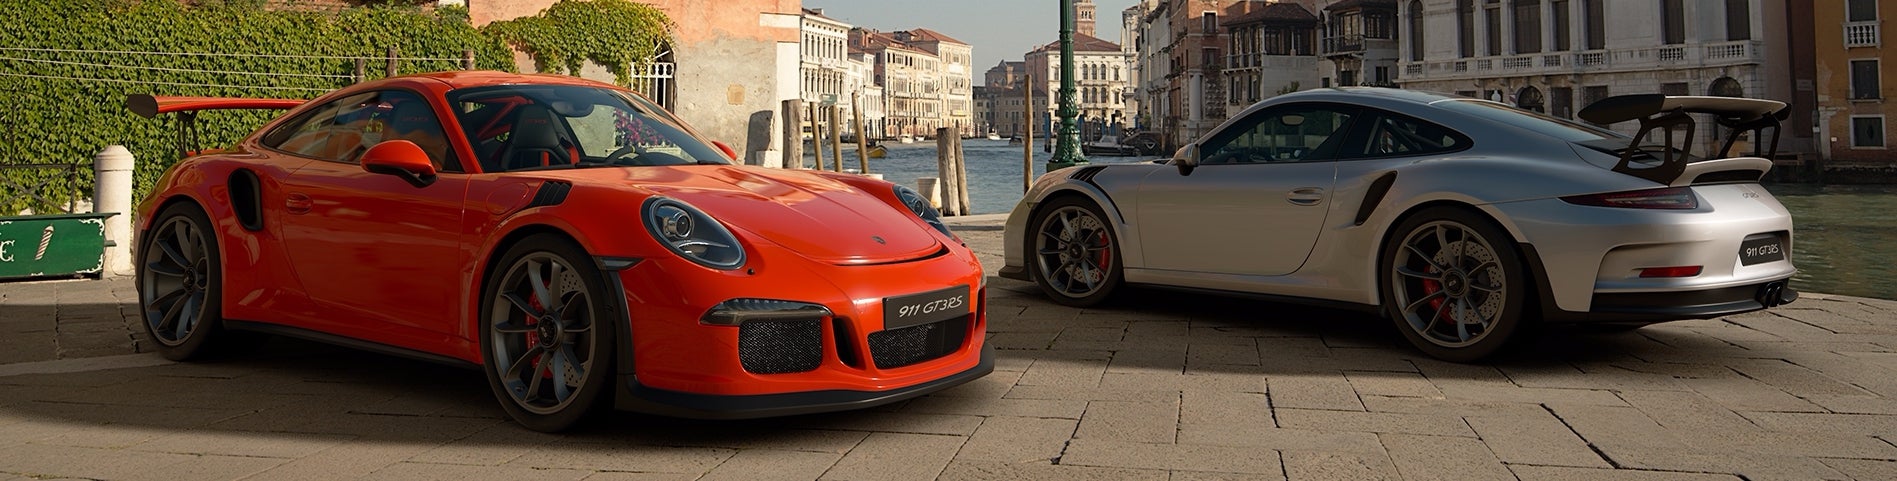 Obrazki dla Digital Foundry: Gran Turismo Sport kontra Forza Motorsport 7